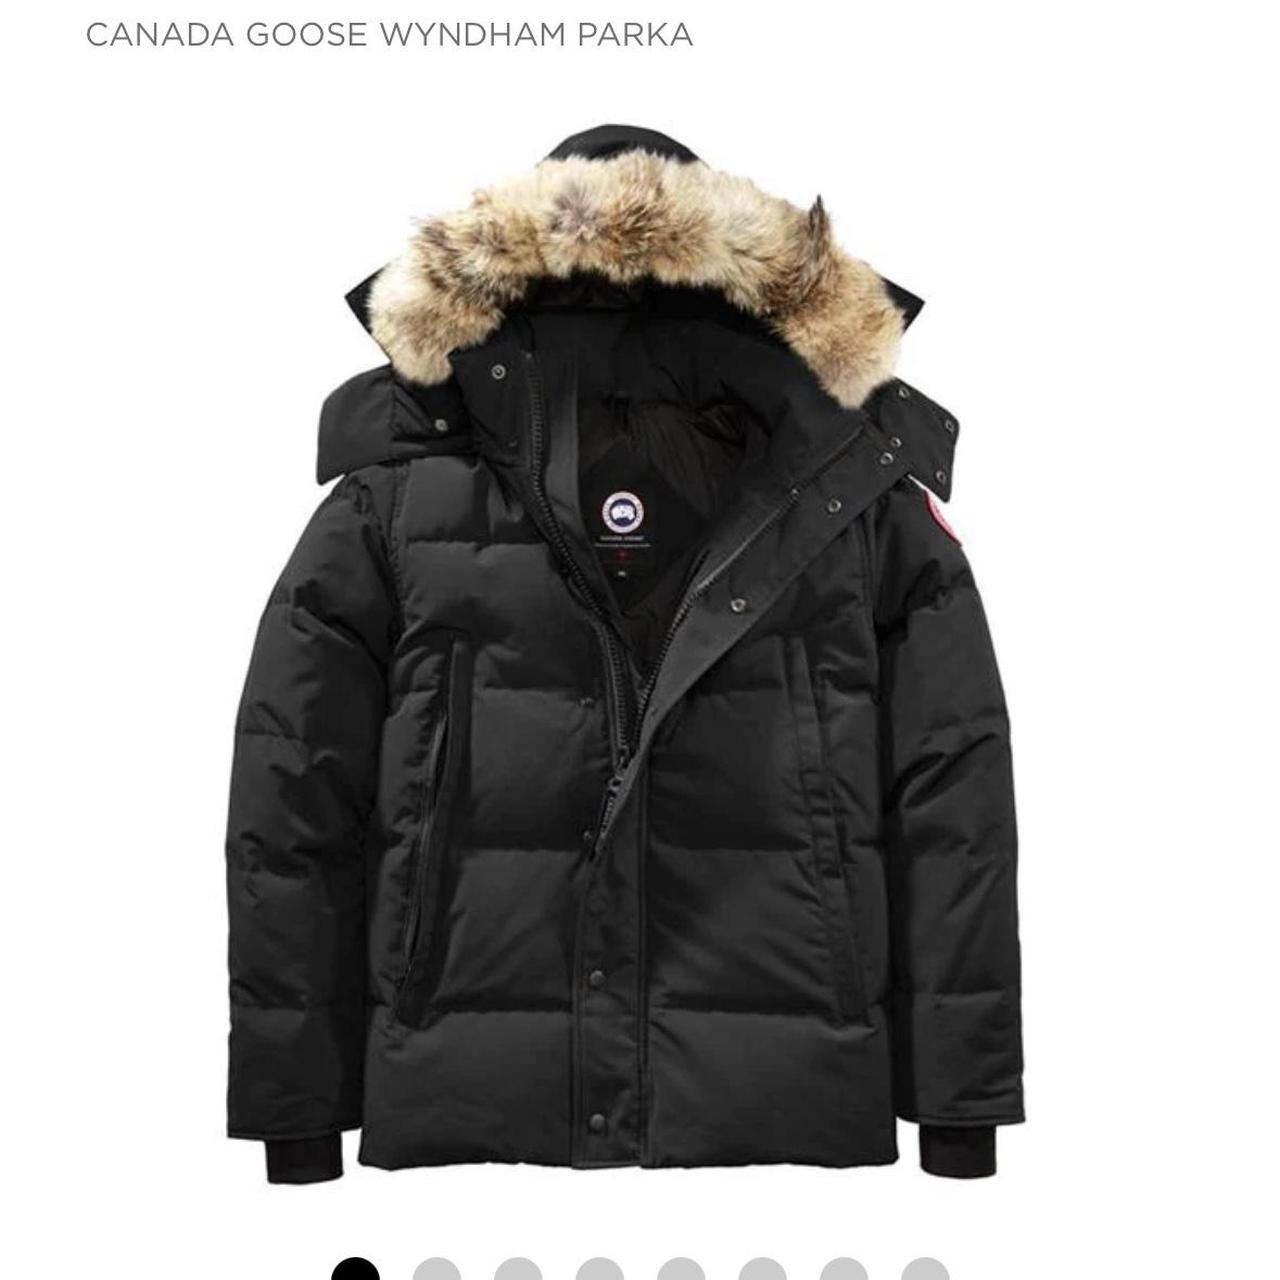 Canada goose whyndam parka size M authentic - Depop